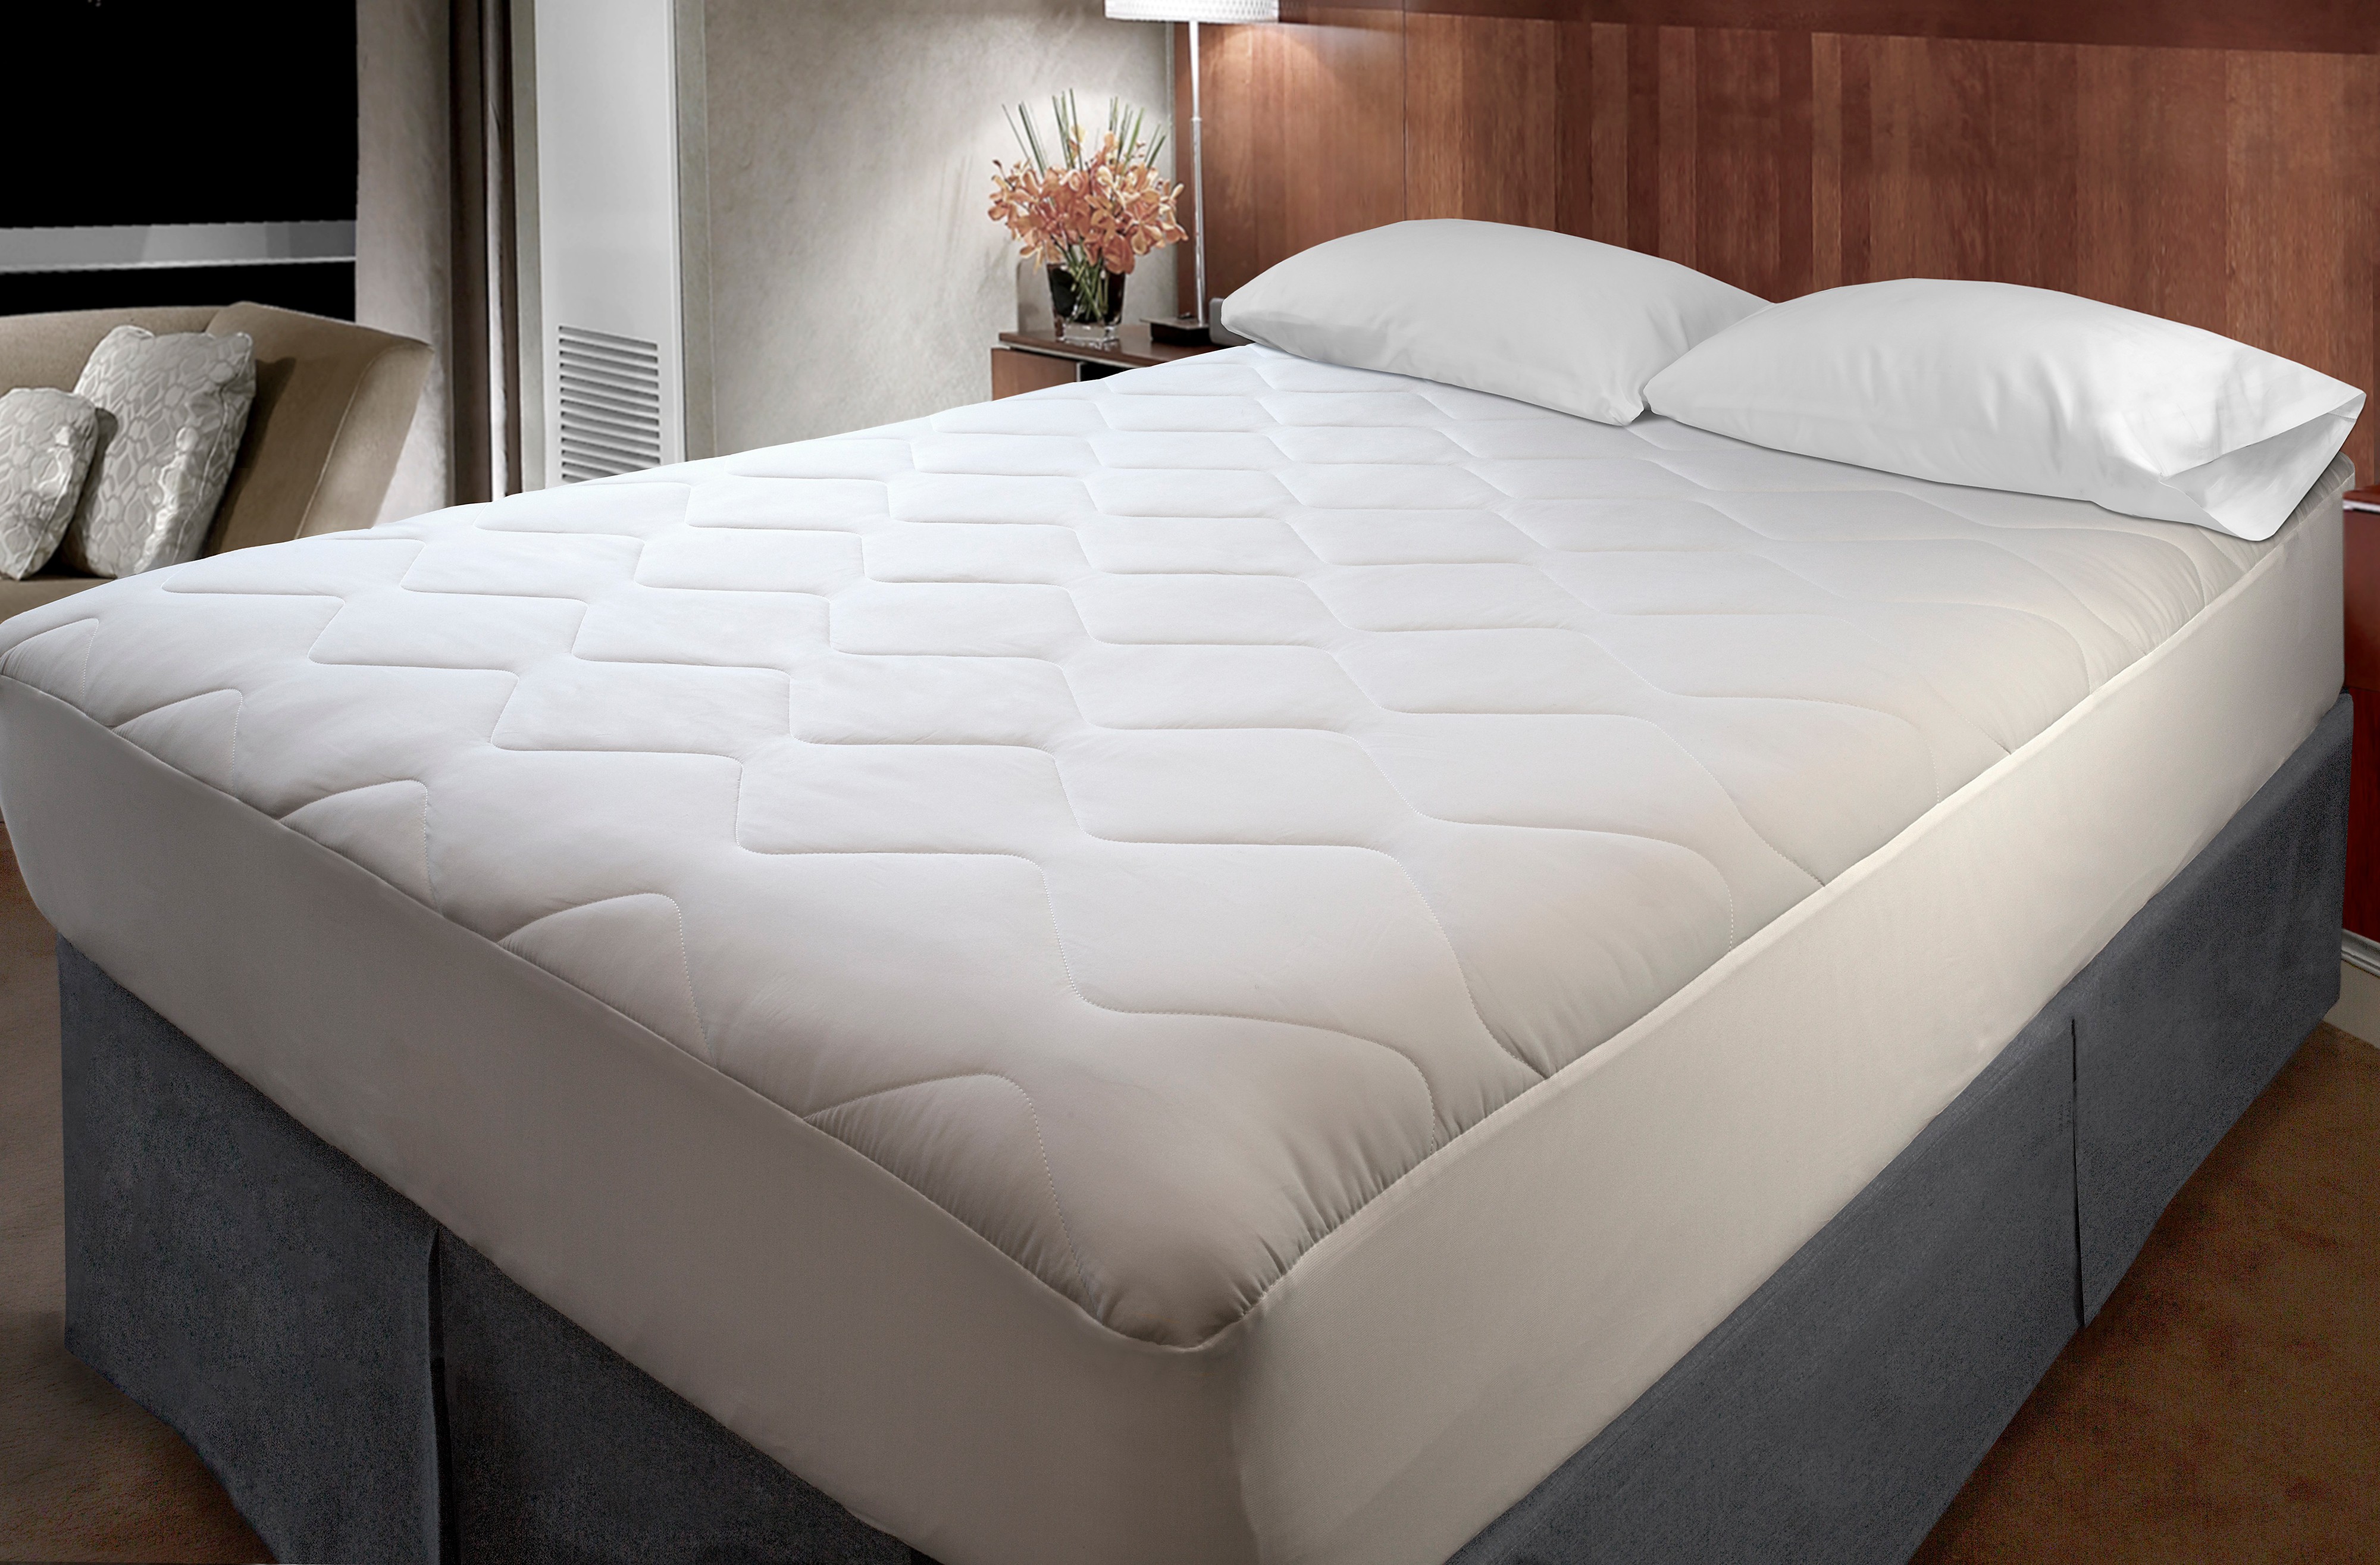 waterproof mattress pad over heated mattress pad